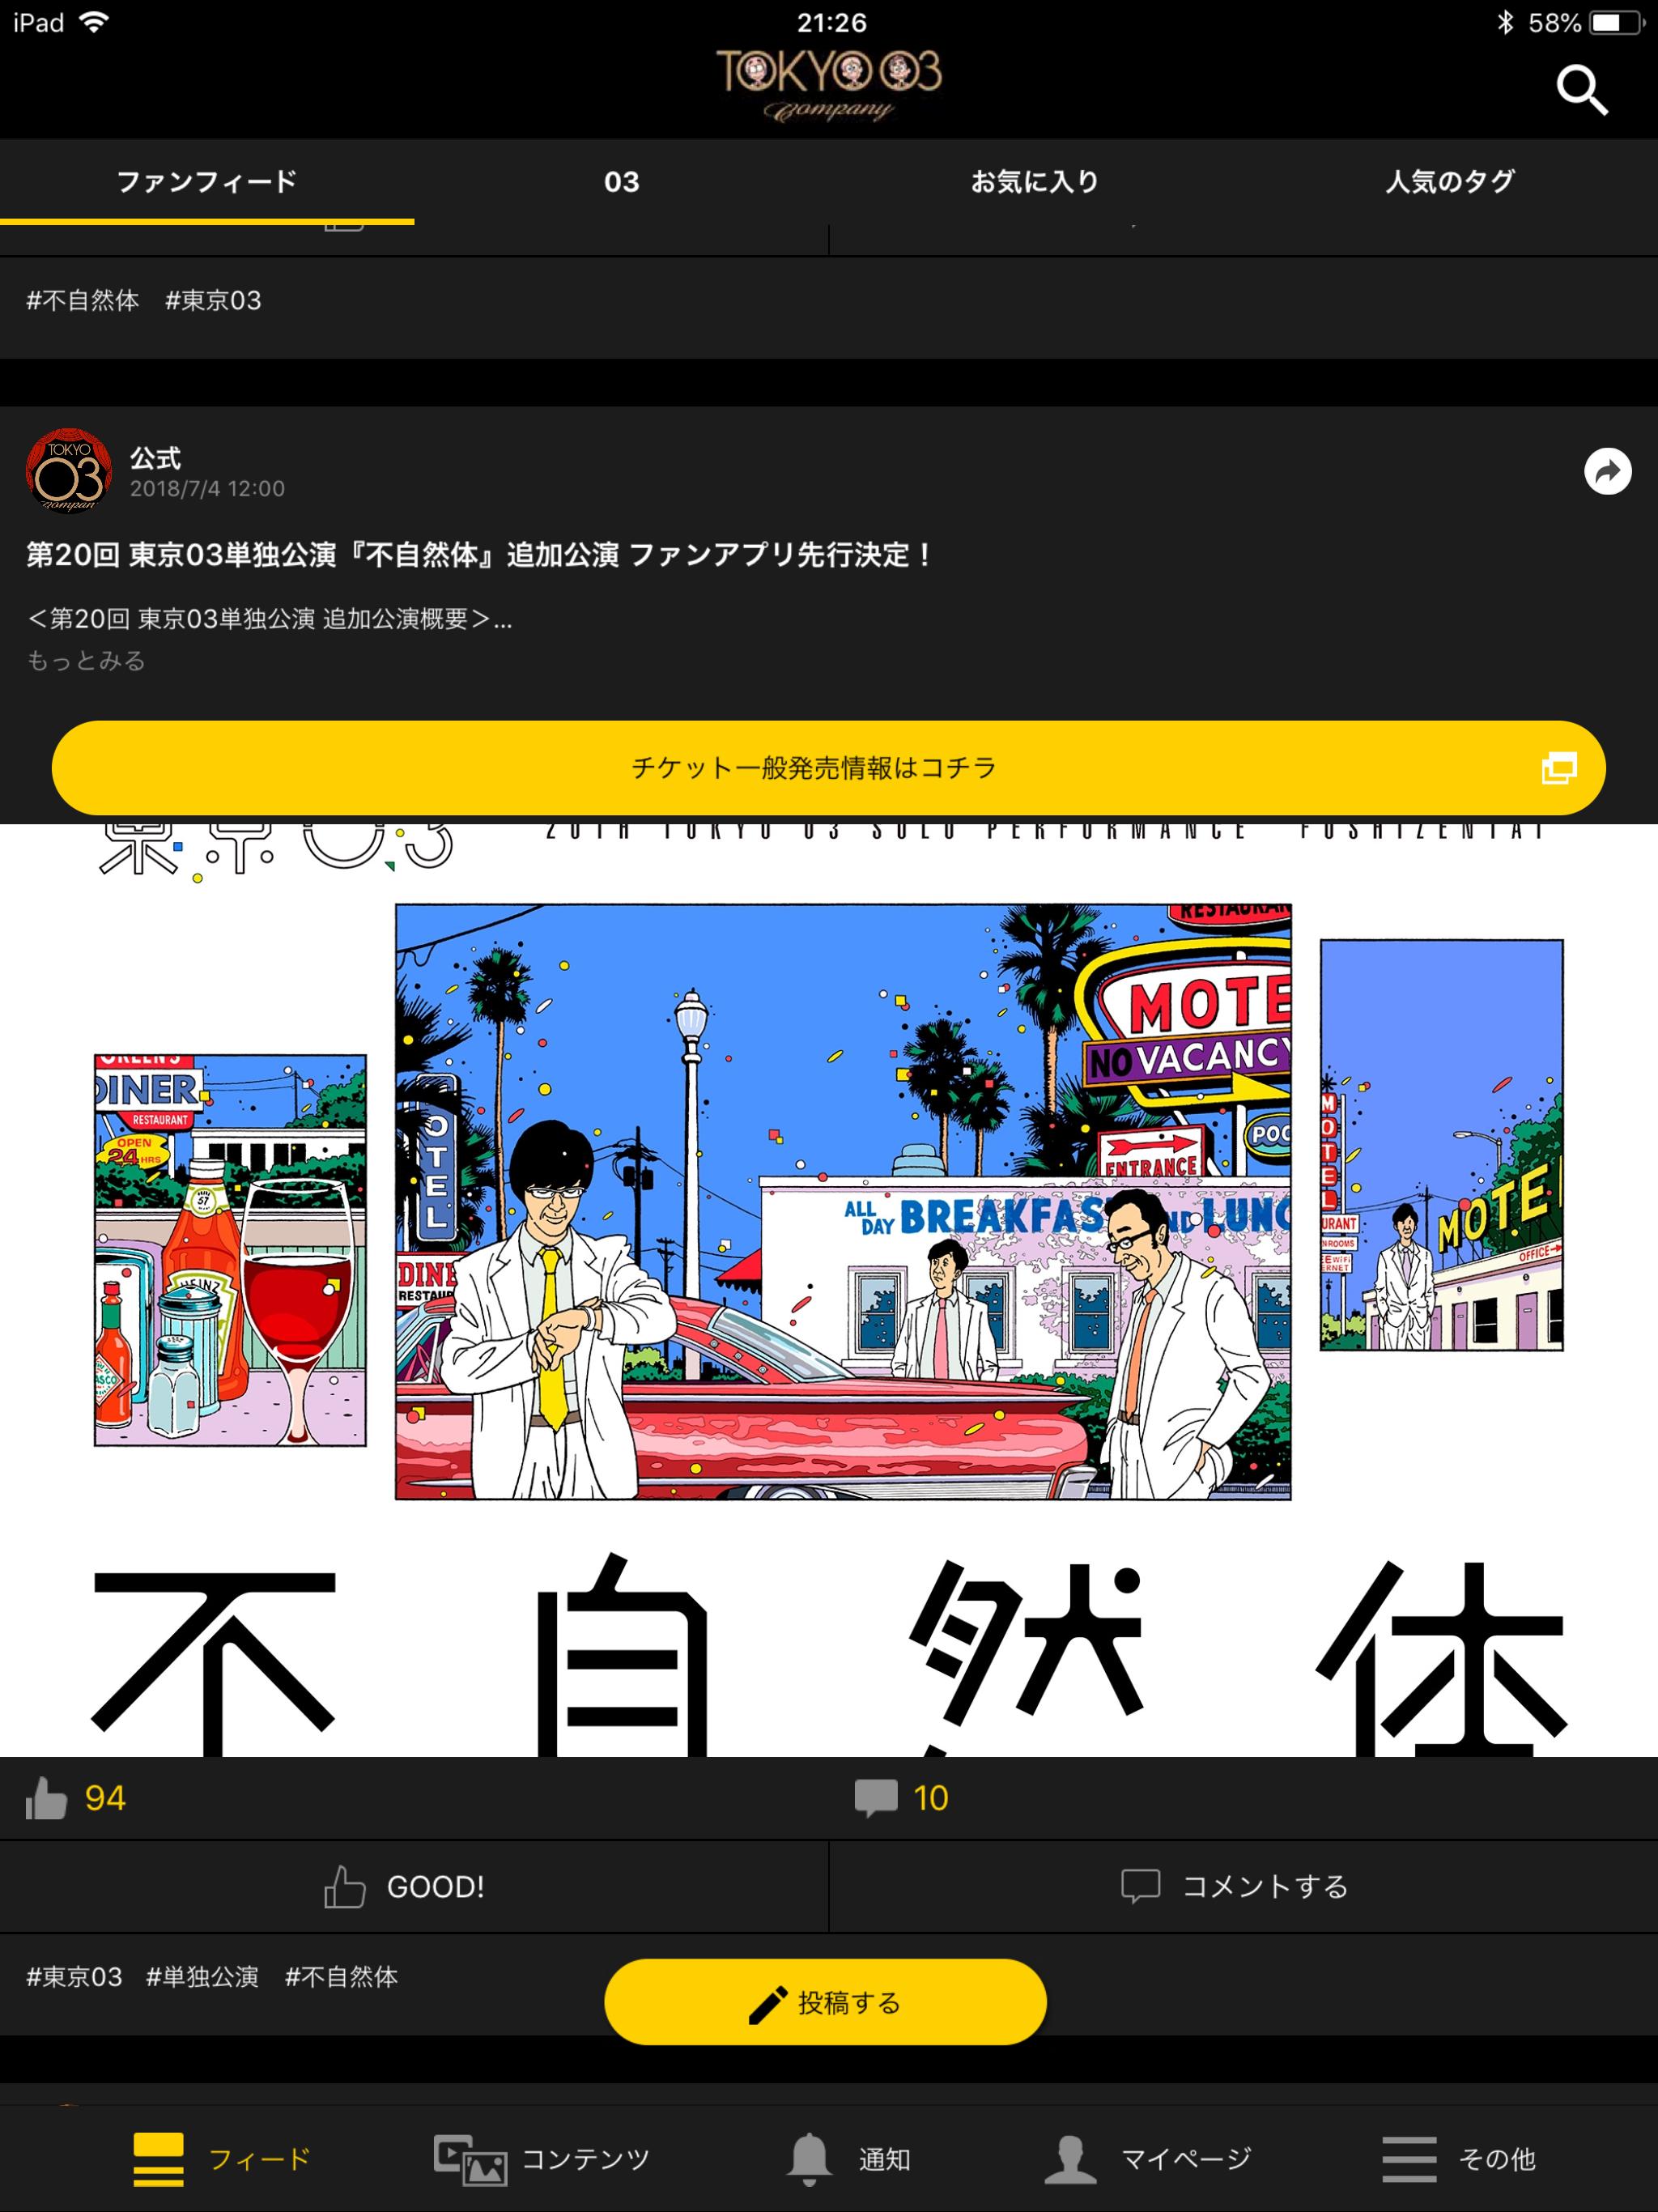 TOKYO 03 Company 3.0.30 Screenshot 12